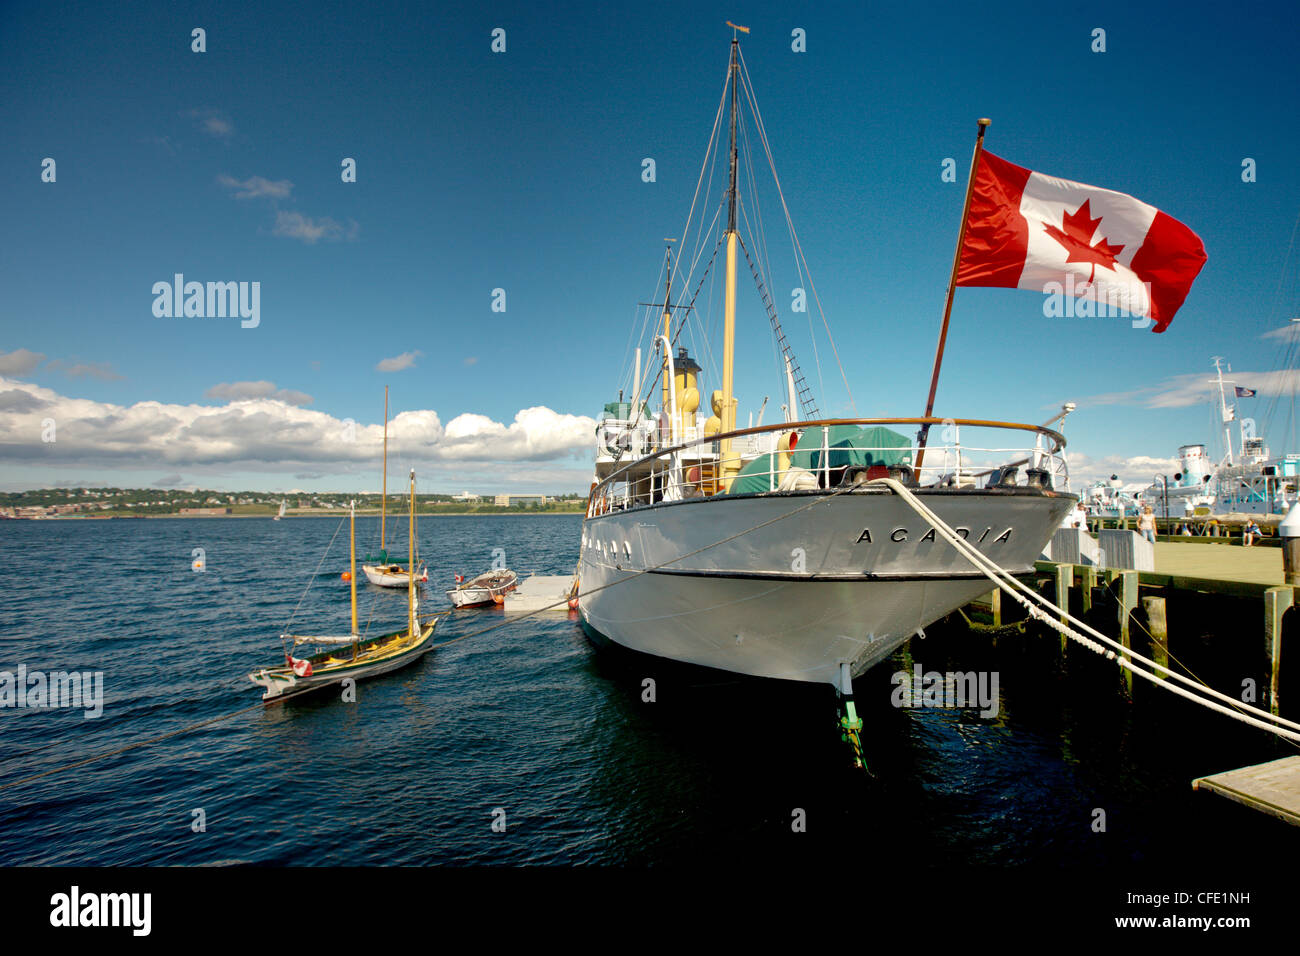 Historic ship Acadia, Martime Museum of the Atlantic, Halifax waterfront, Nova Scotia, Canada Stock Photo